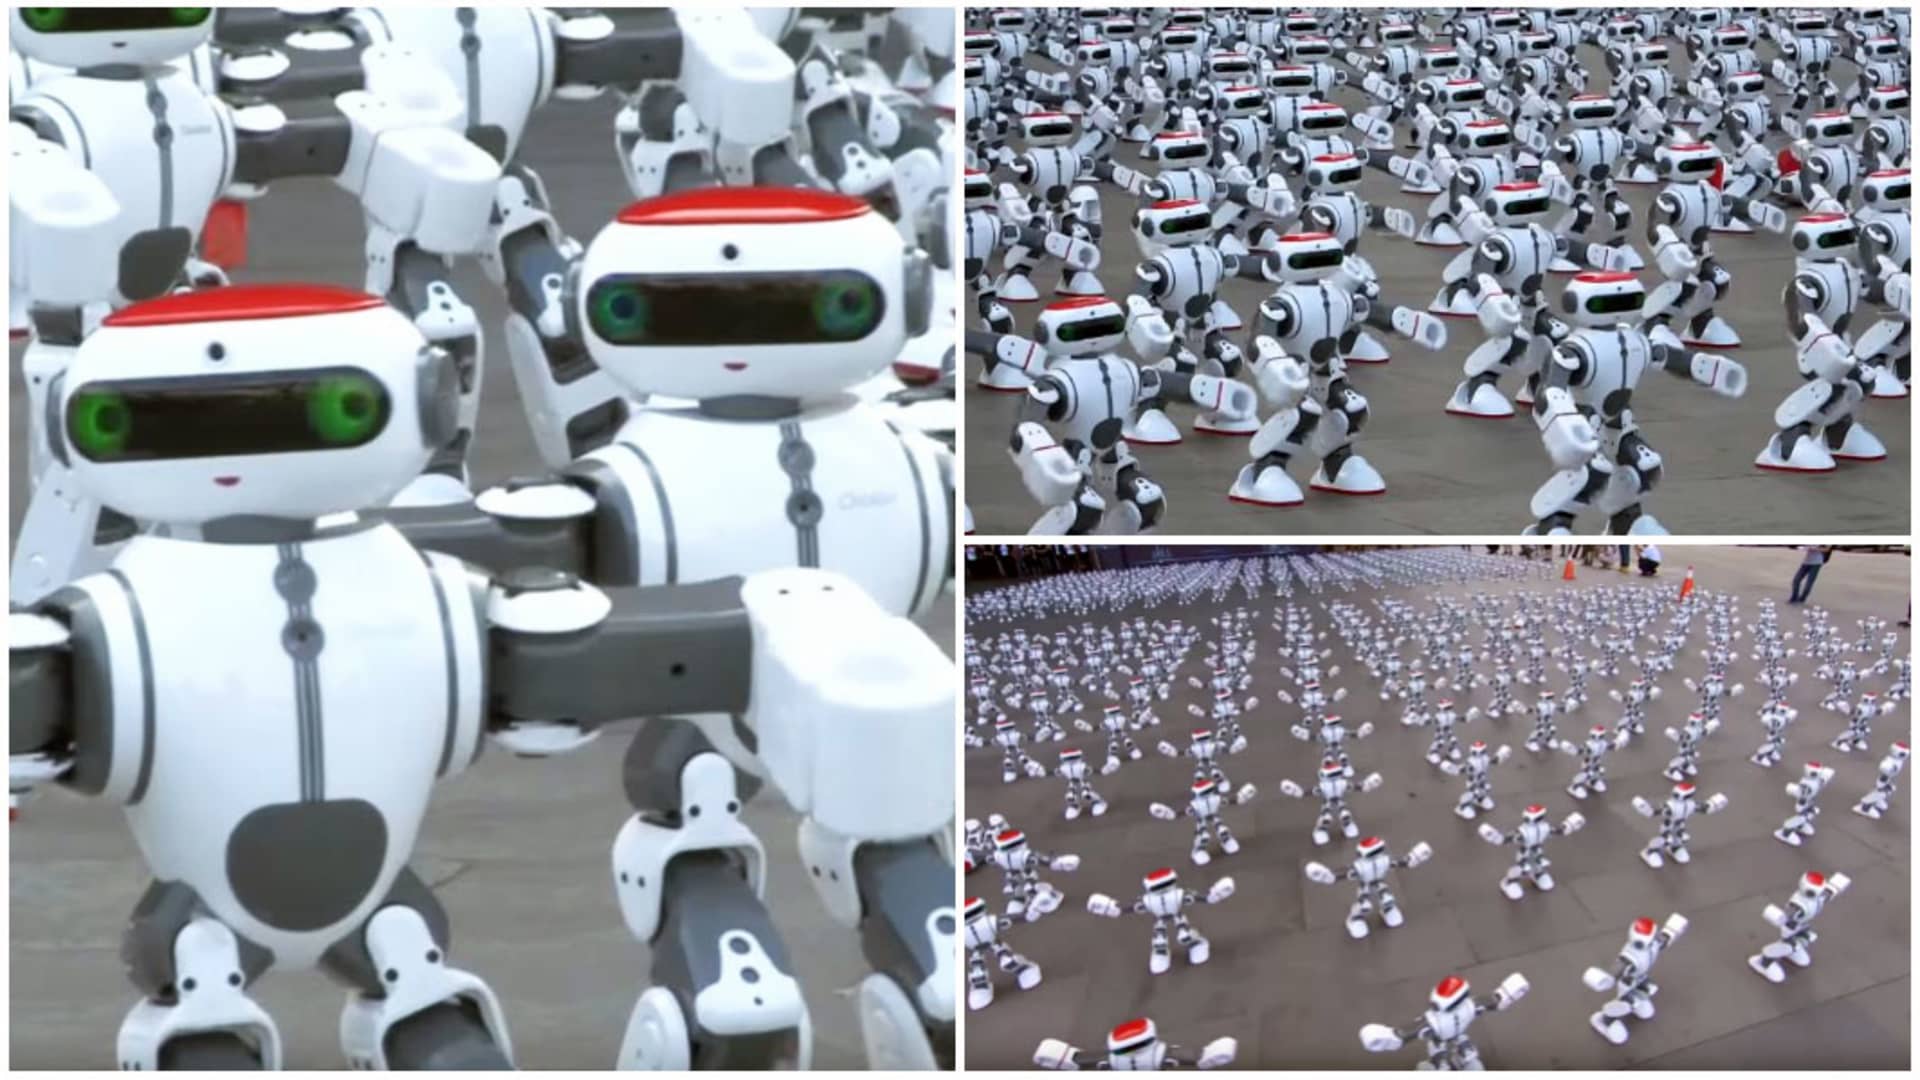 Watch 1,069 dancing robots break the Guinness World Record